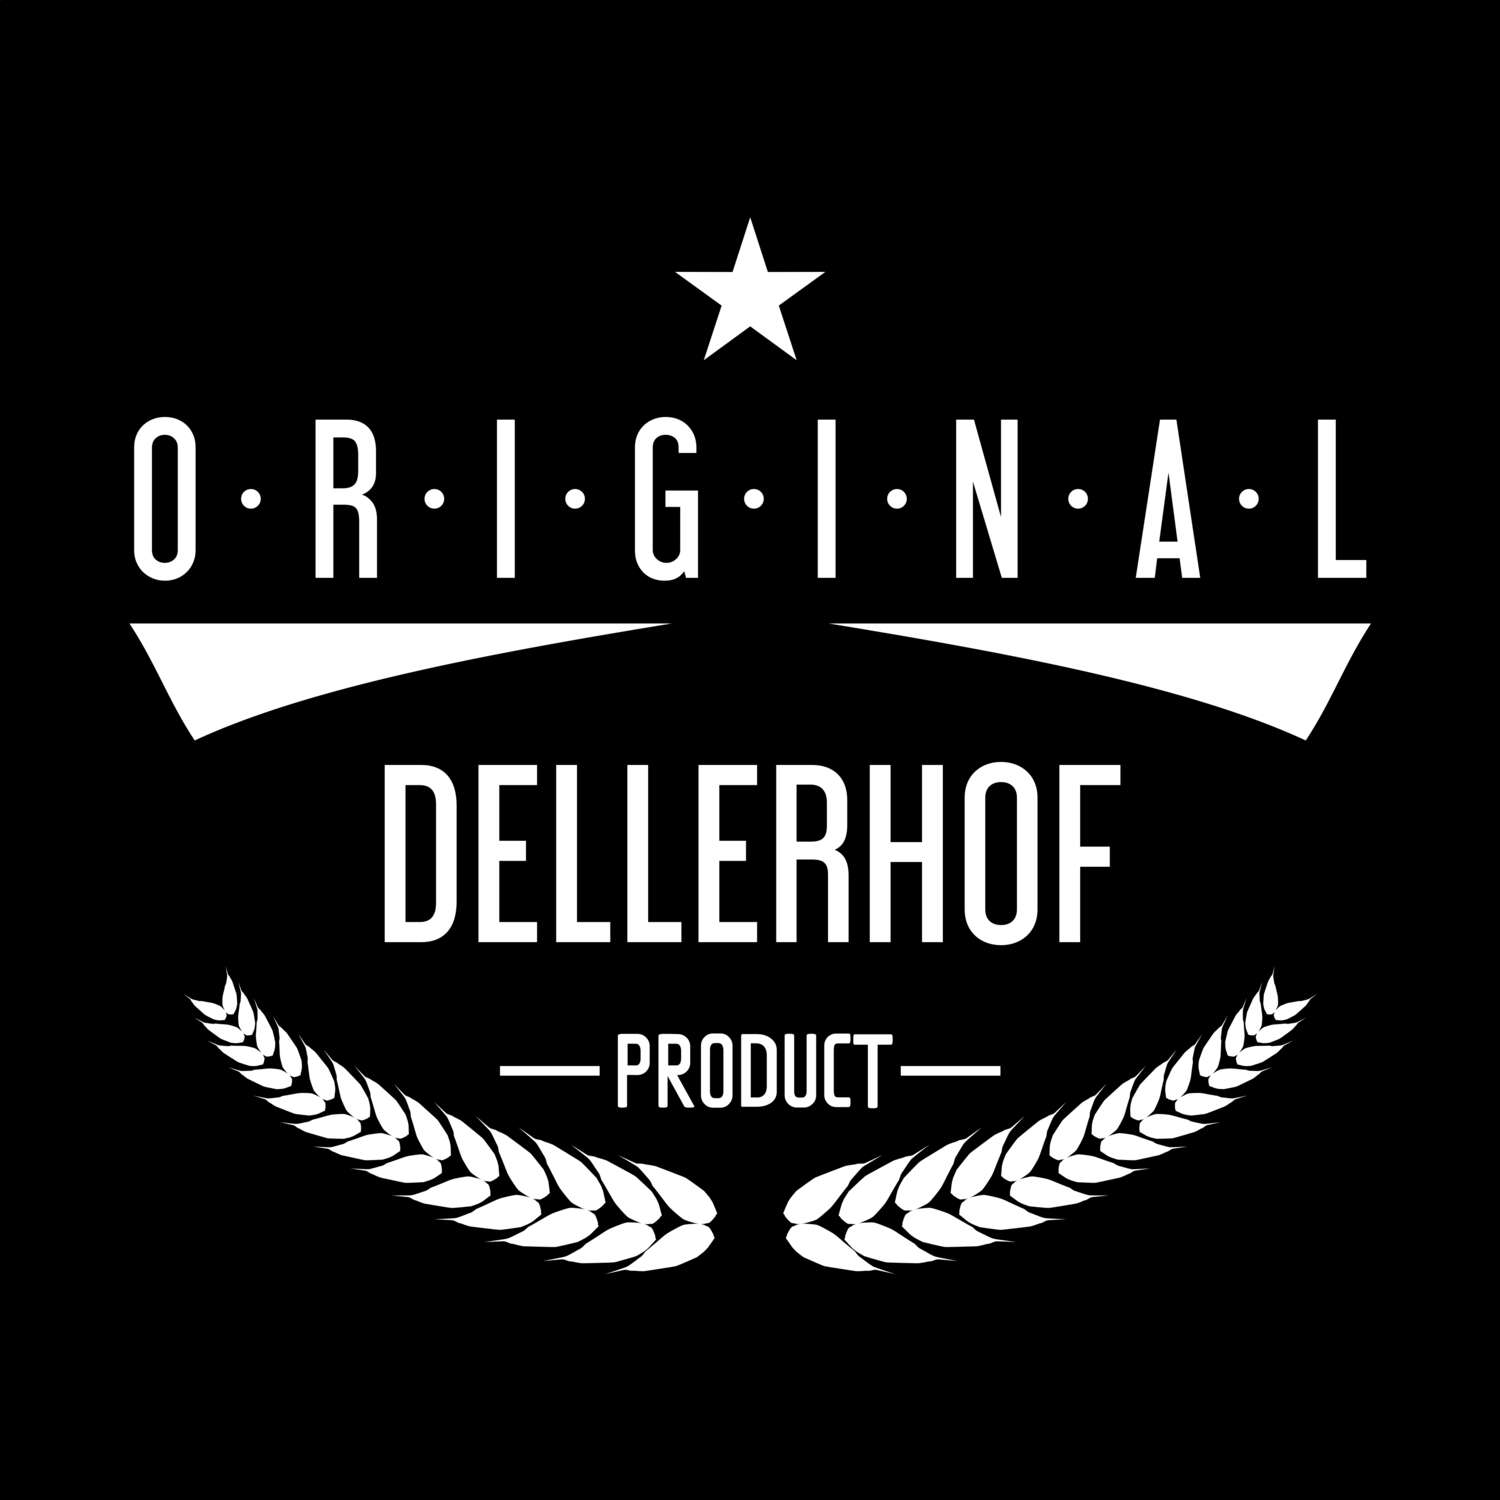 Dellerhof T-Shirt »Original Product«